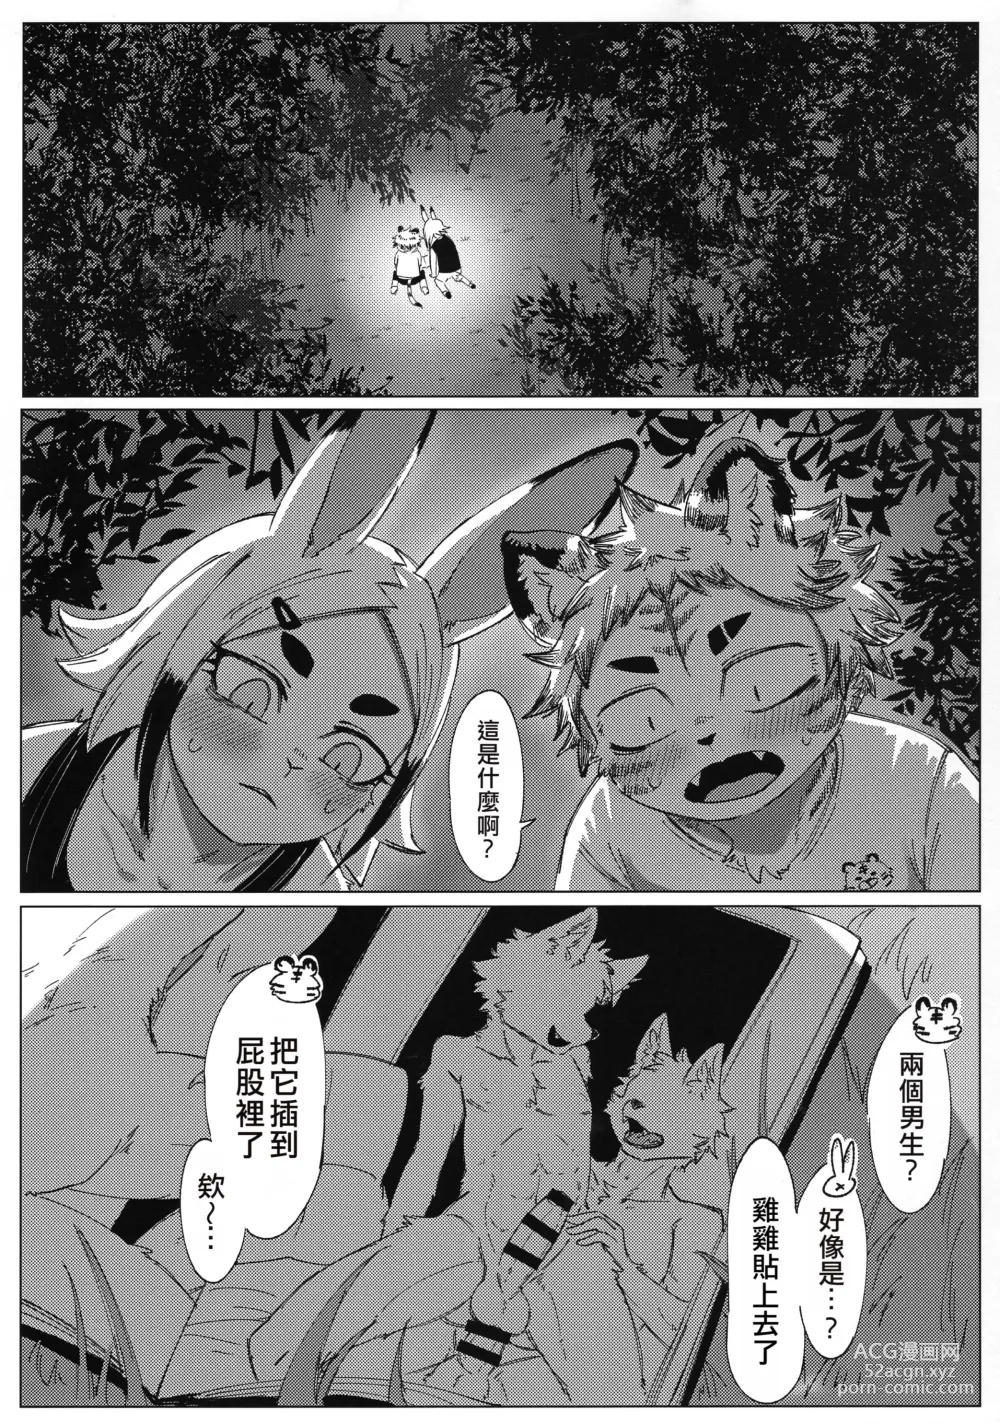 Page 3 of doujinshi 祭典前日